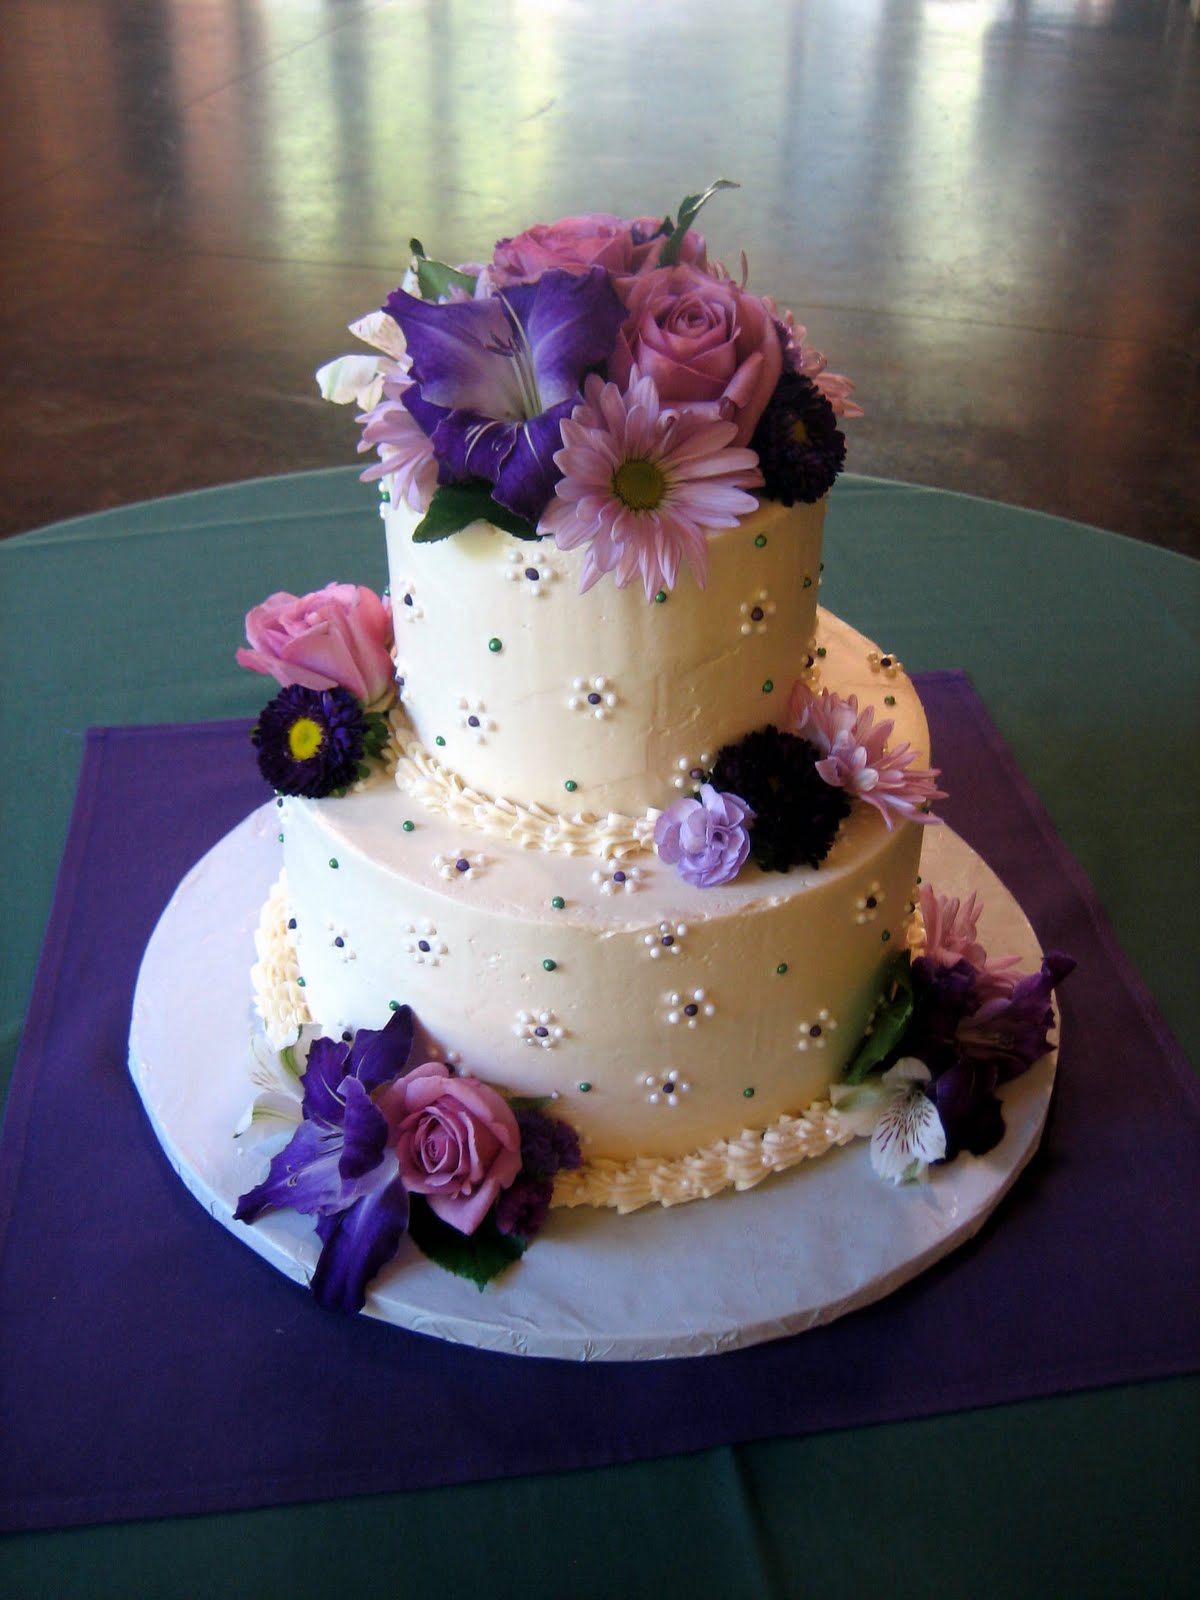 Jillicious Discoveries Three Purple Wedding Cakes